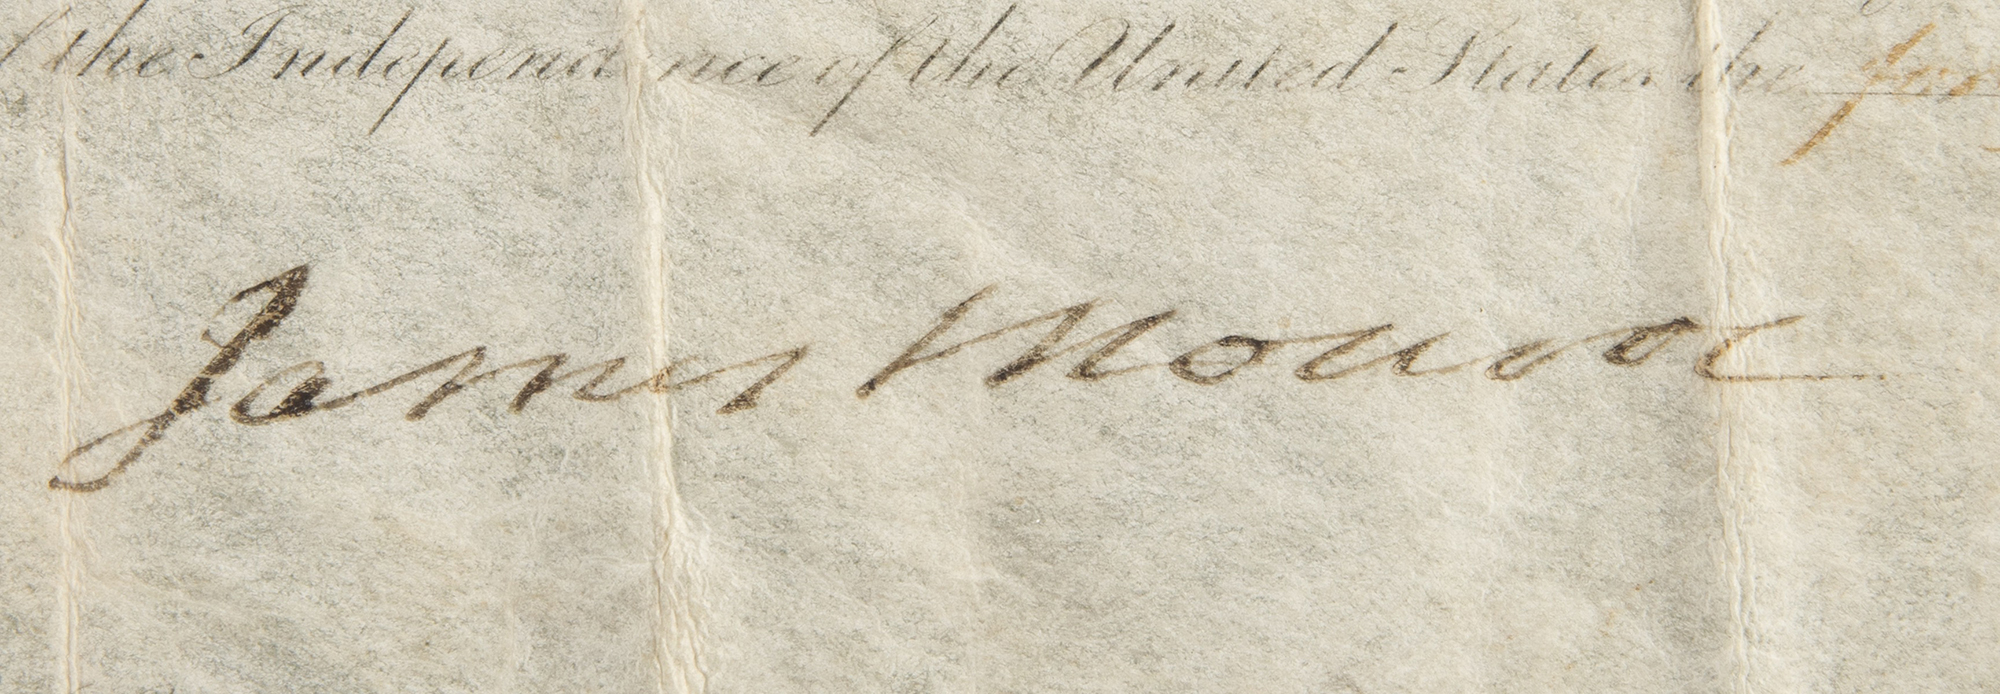 Lot #74 James Monroe Document Signed as President - Image 3